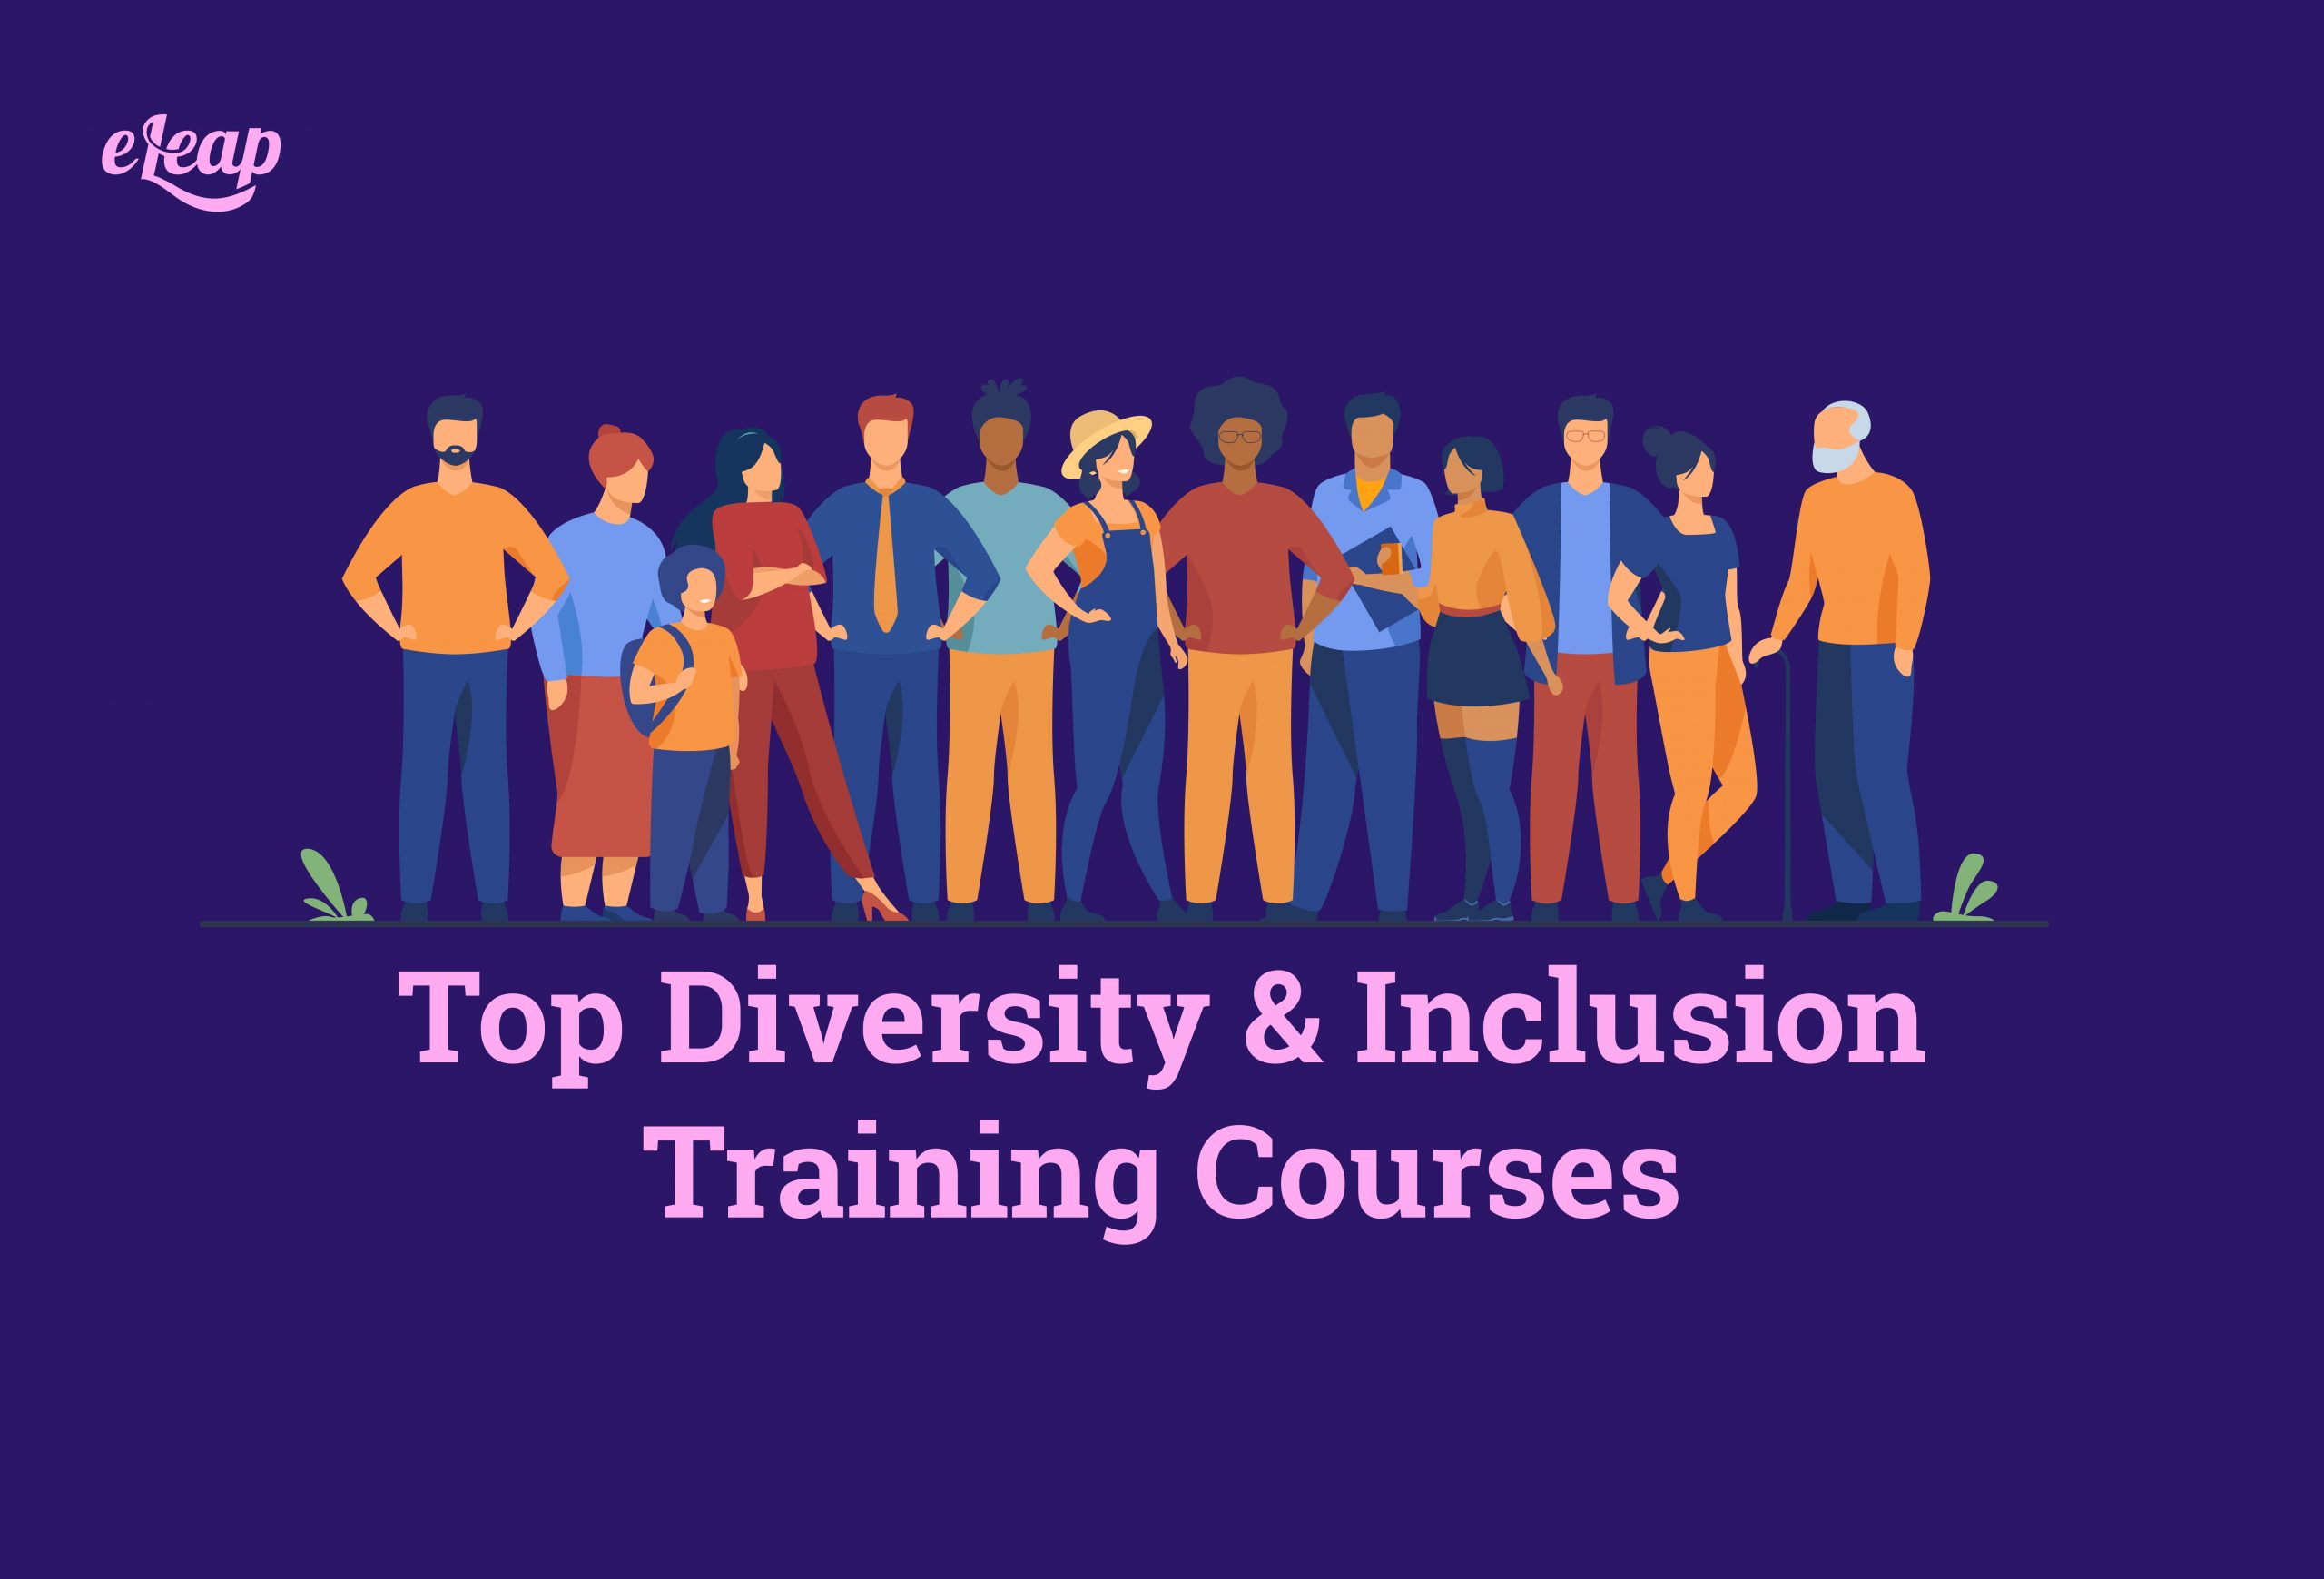 Top Diversity & Inclusion Training Courses